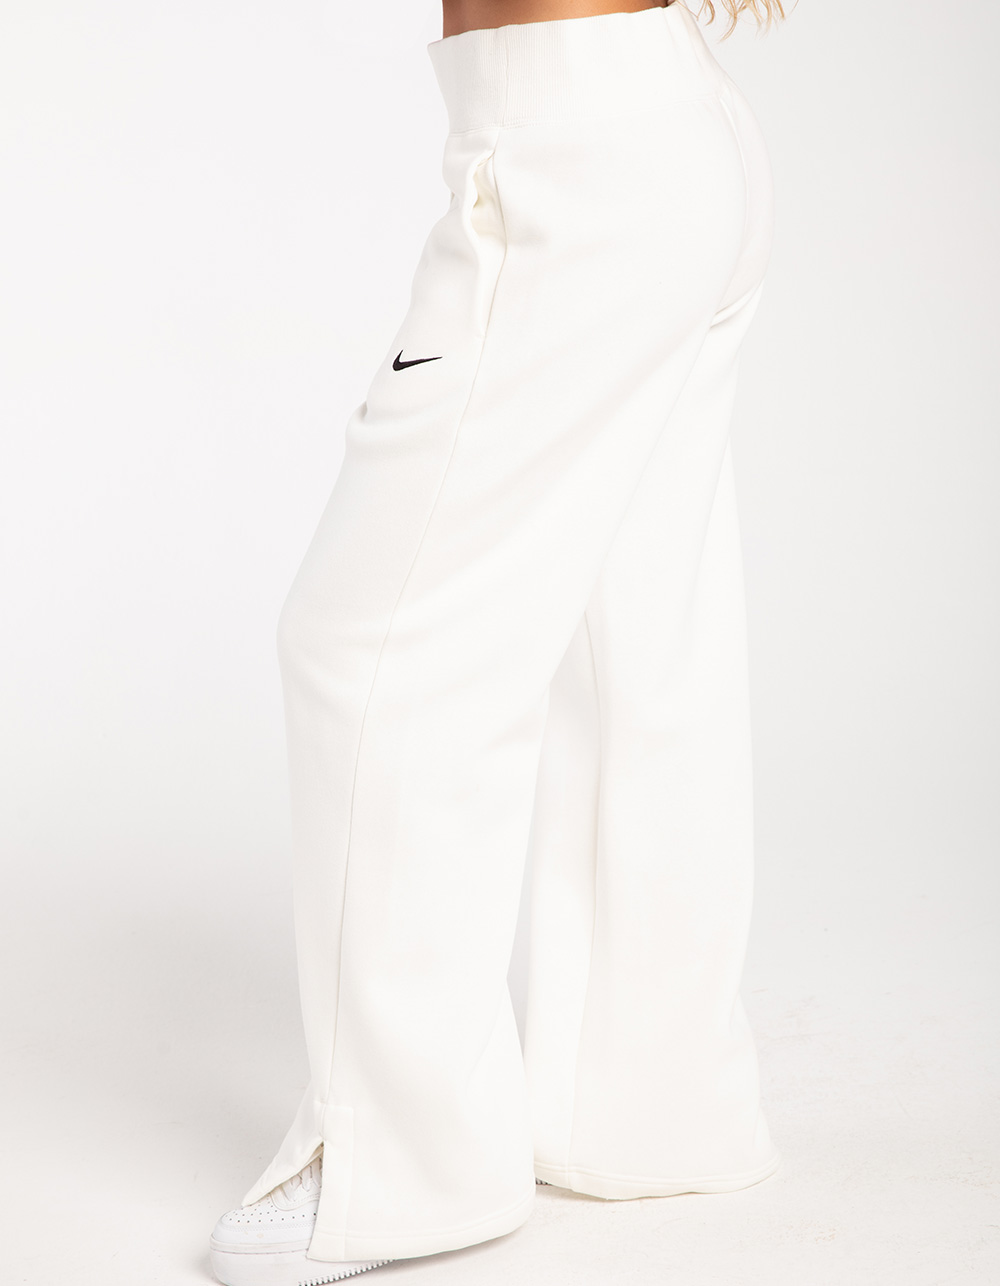 Women's high-waisted wide-leg jogging suit Nike Phoenix Fleece